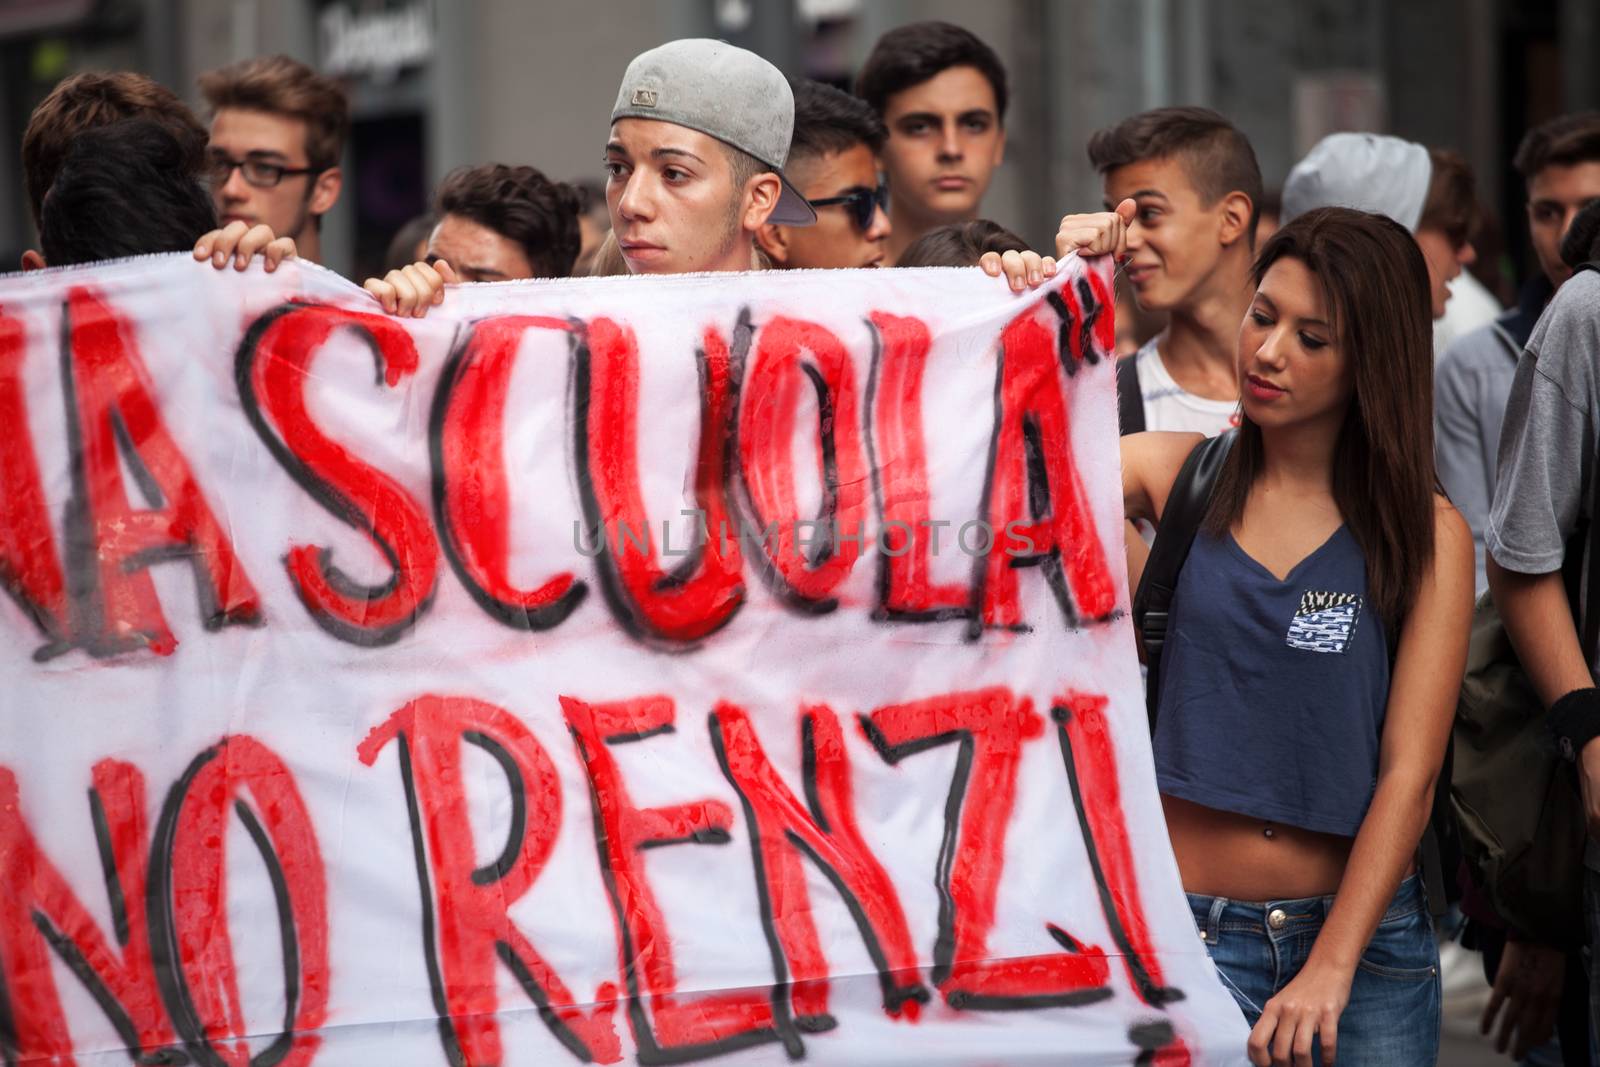 ITALY - PROTEST- DEMONSTRATION AGAINST SCHOOL REFORM by newzulu